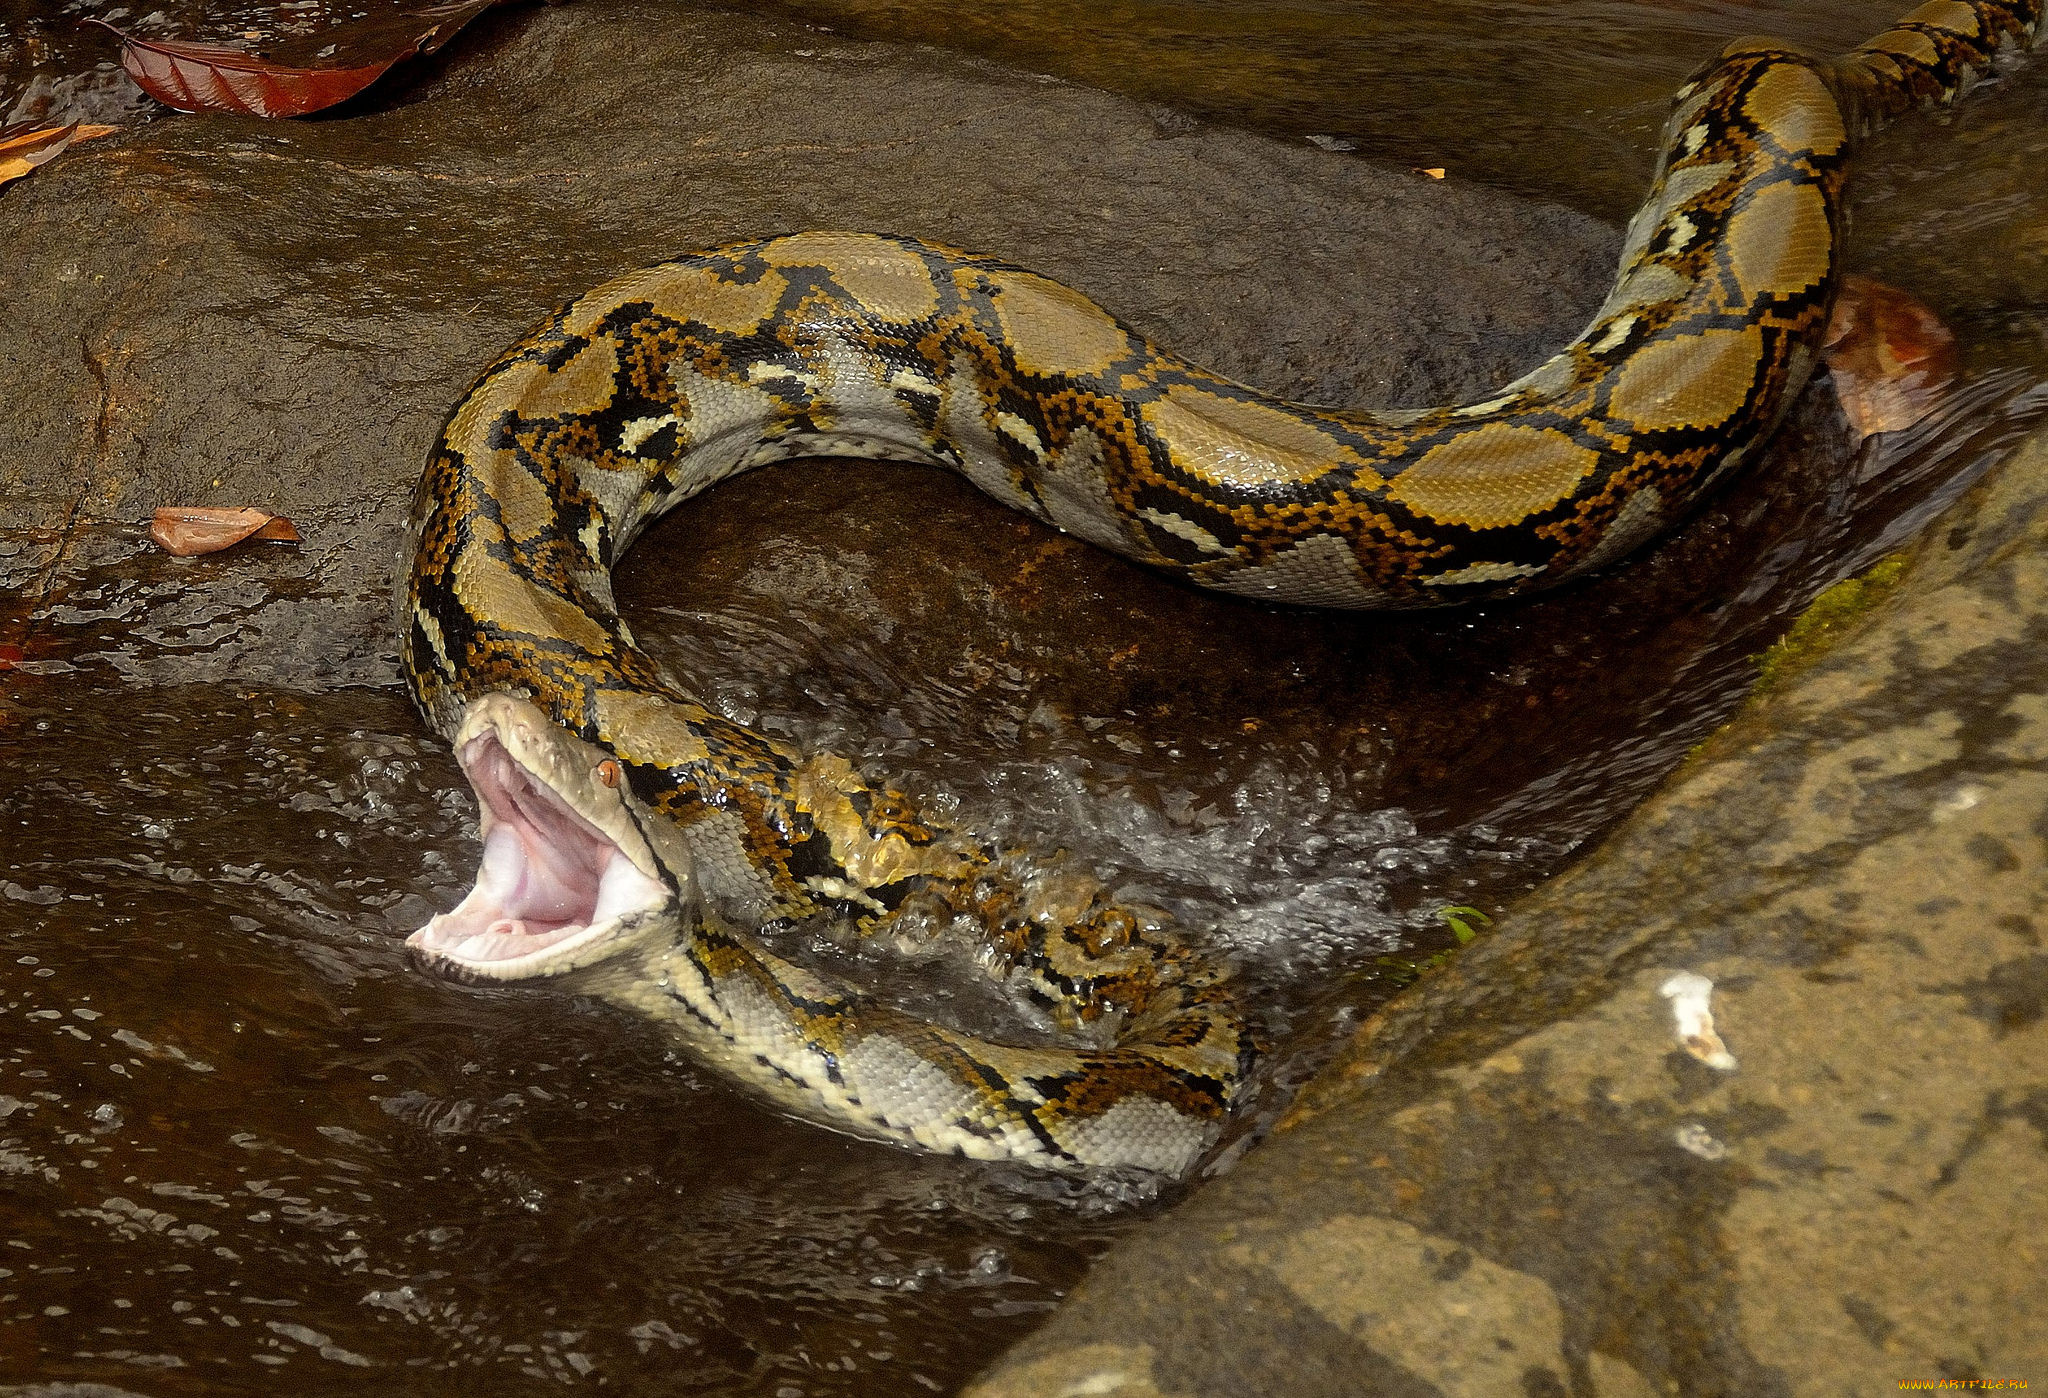 Snakes are longer. Анаконда змея. Сетчатый питон 10 метров. Удав сетчатый питон.